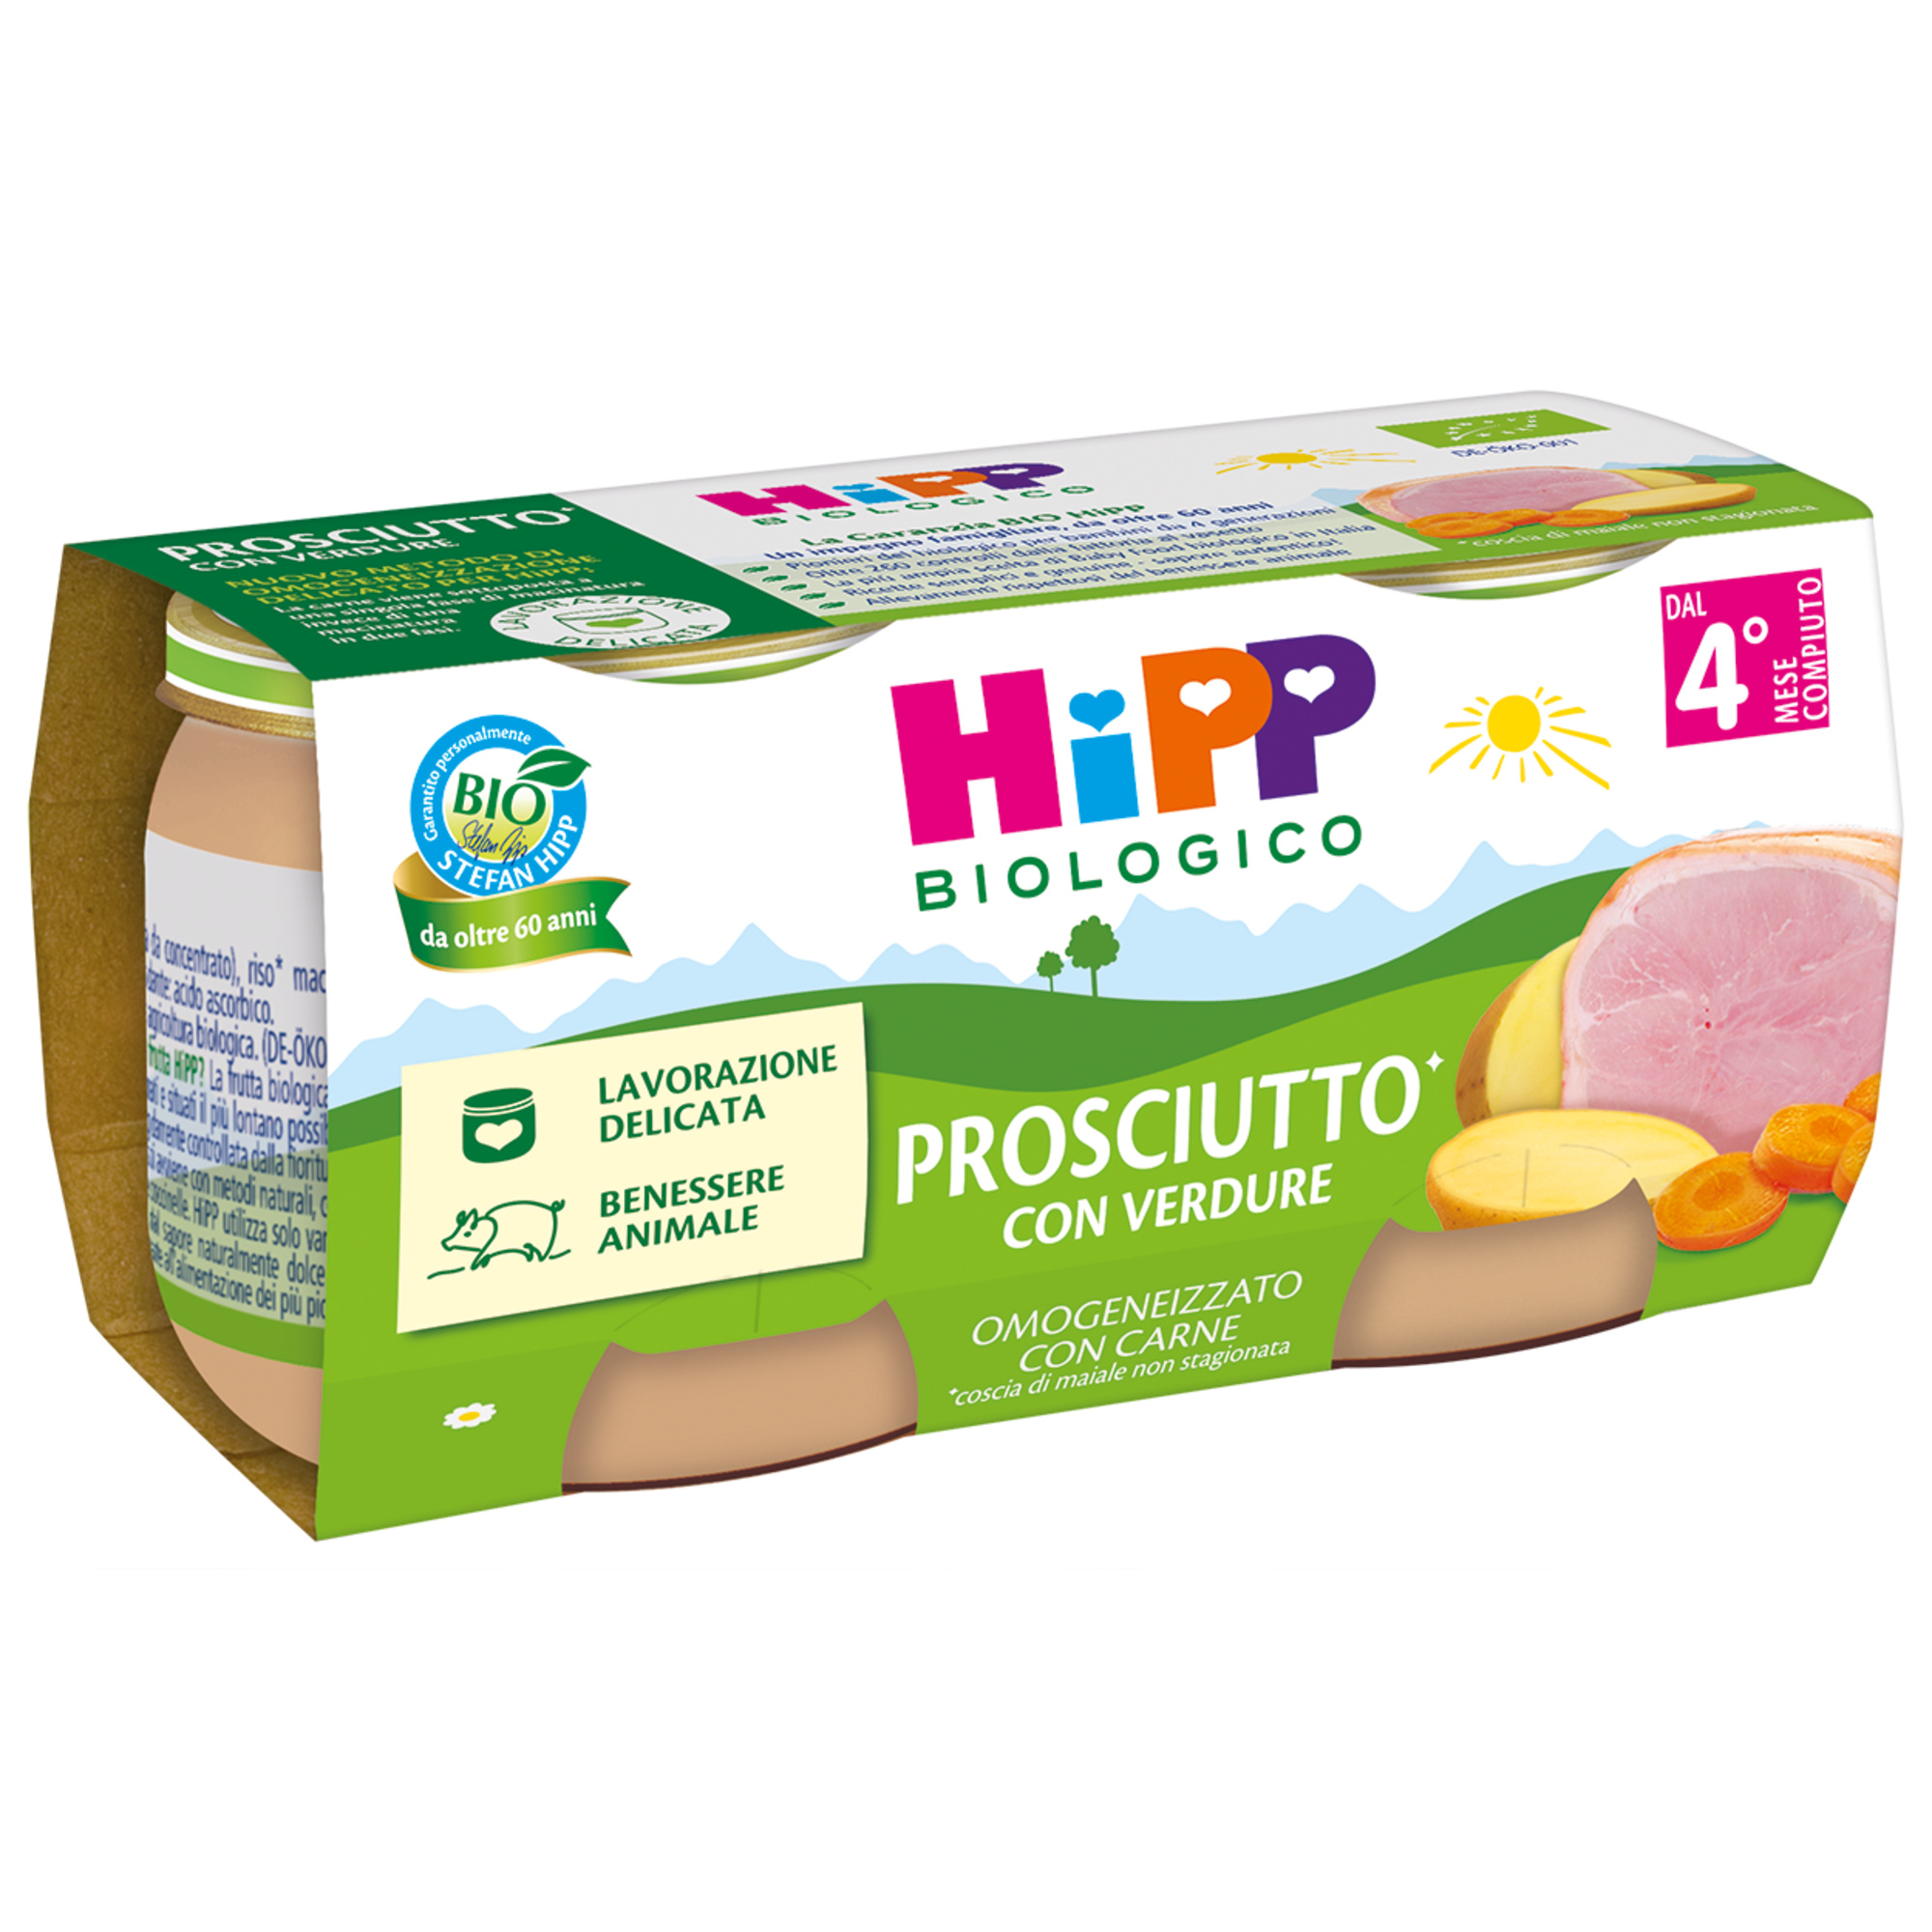 Hipp omogeneizzato prosciutto con verdure 2x80g - Hipp Baby